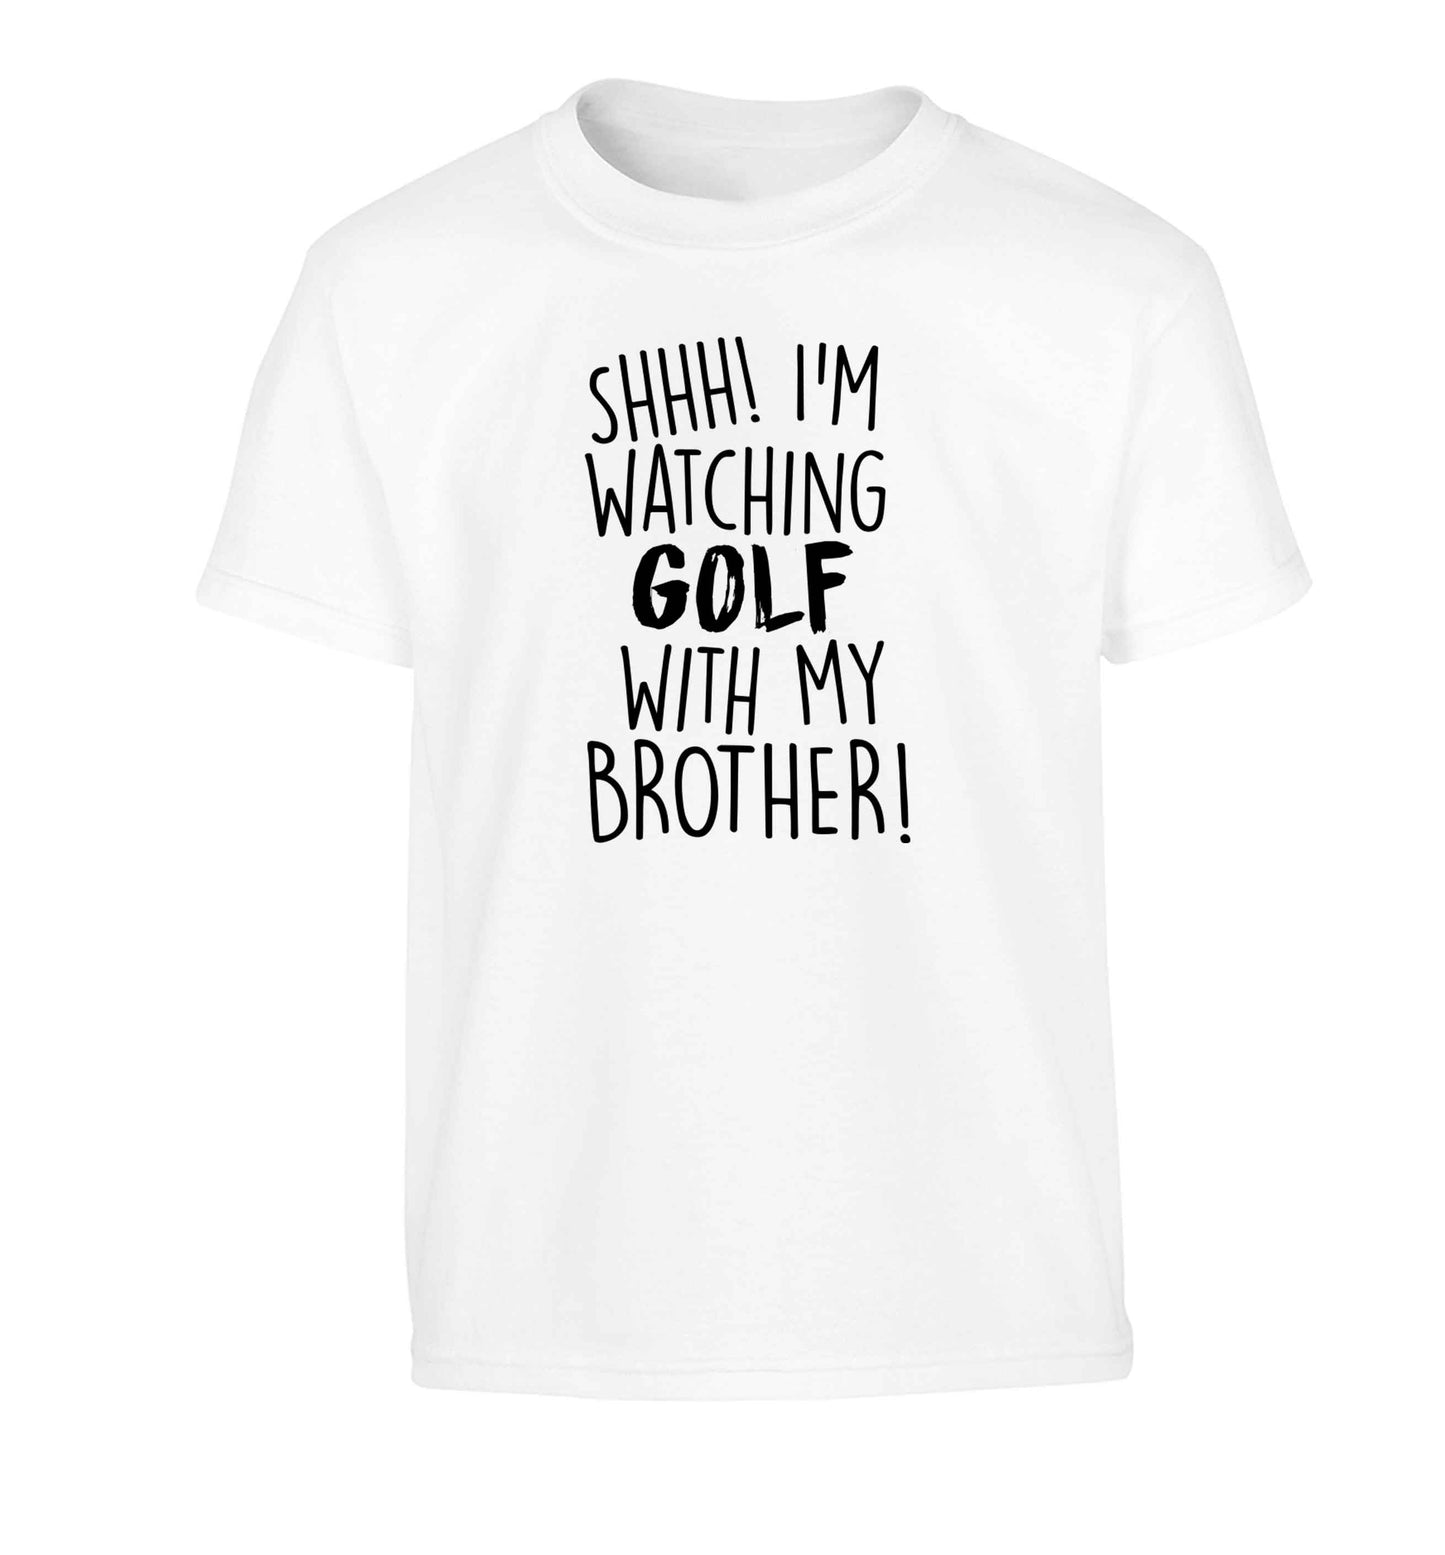 Shh I'm watching golf with my brother Children's white Tshirt 12-13 Years